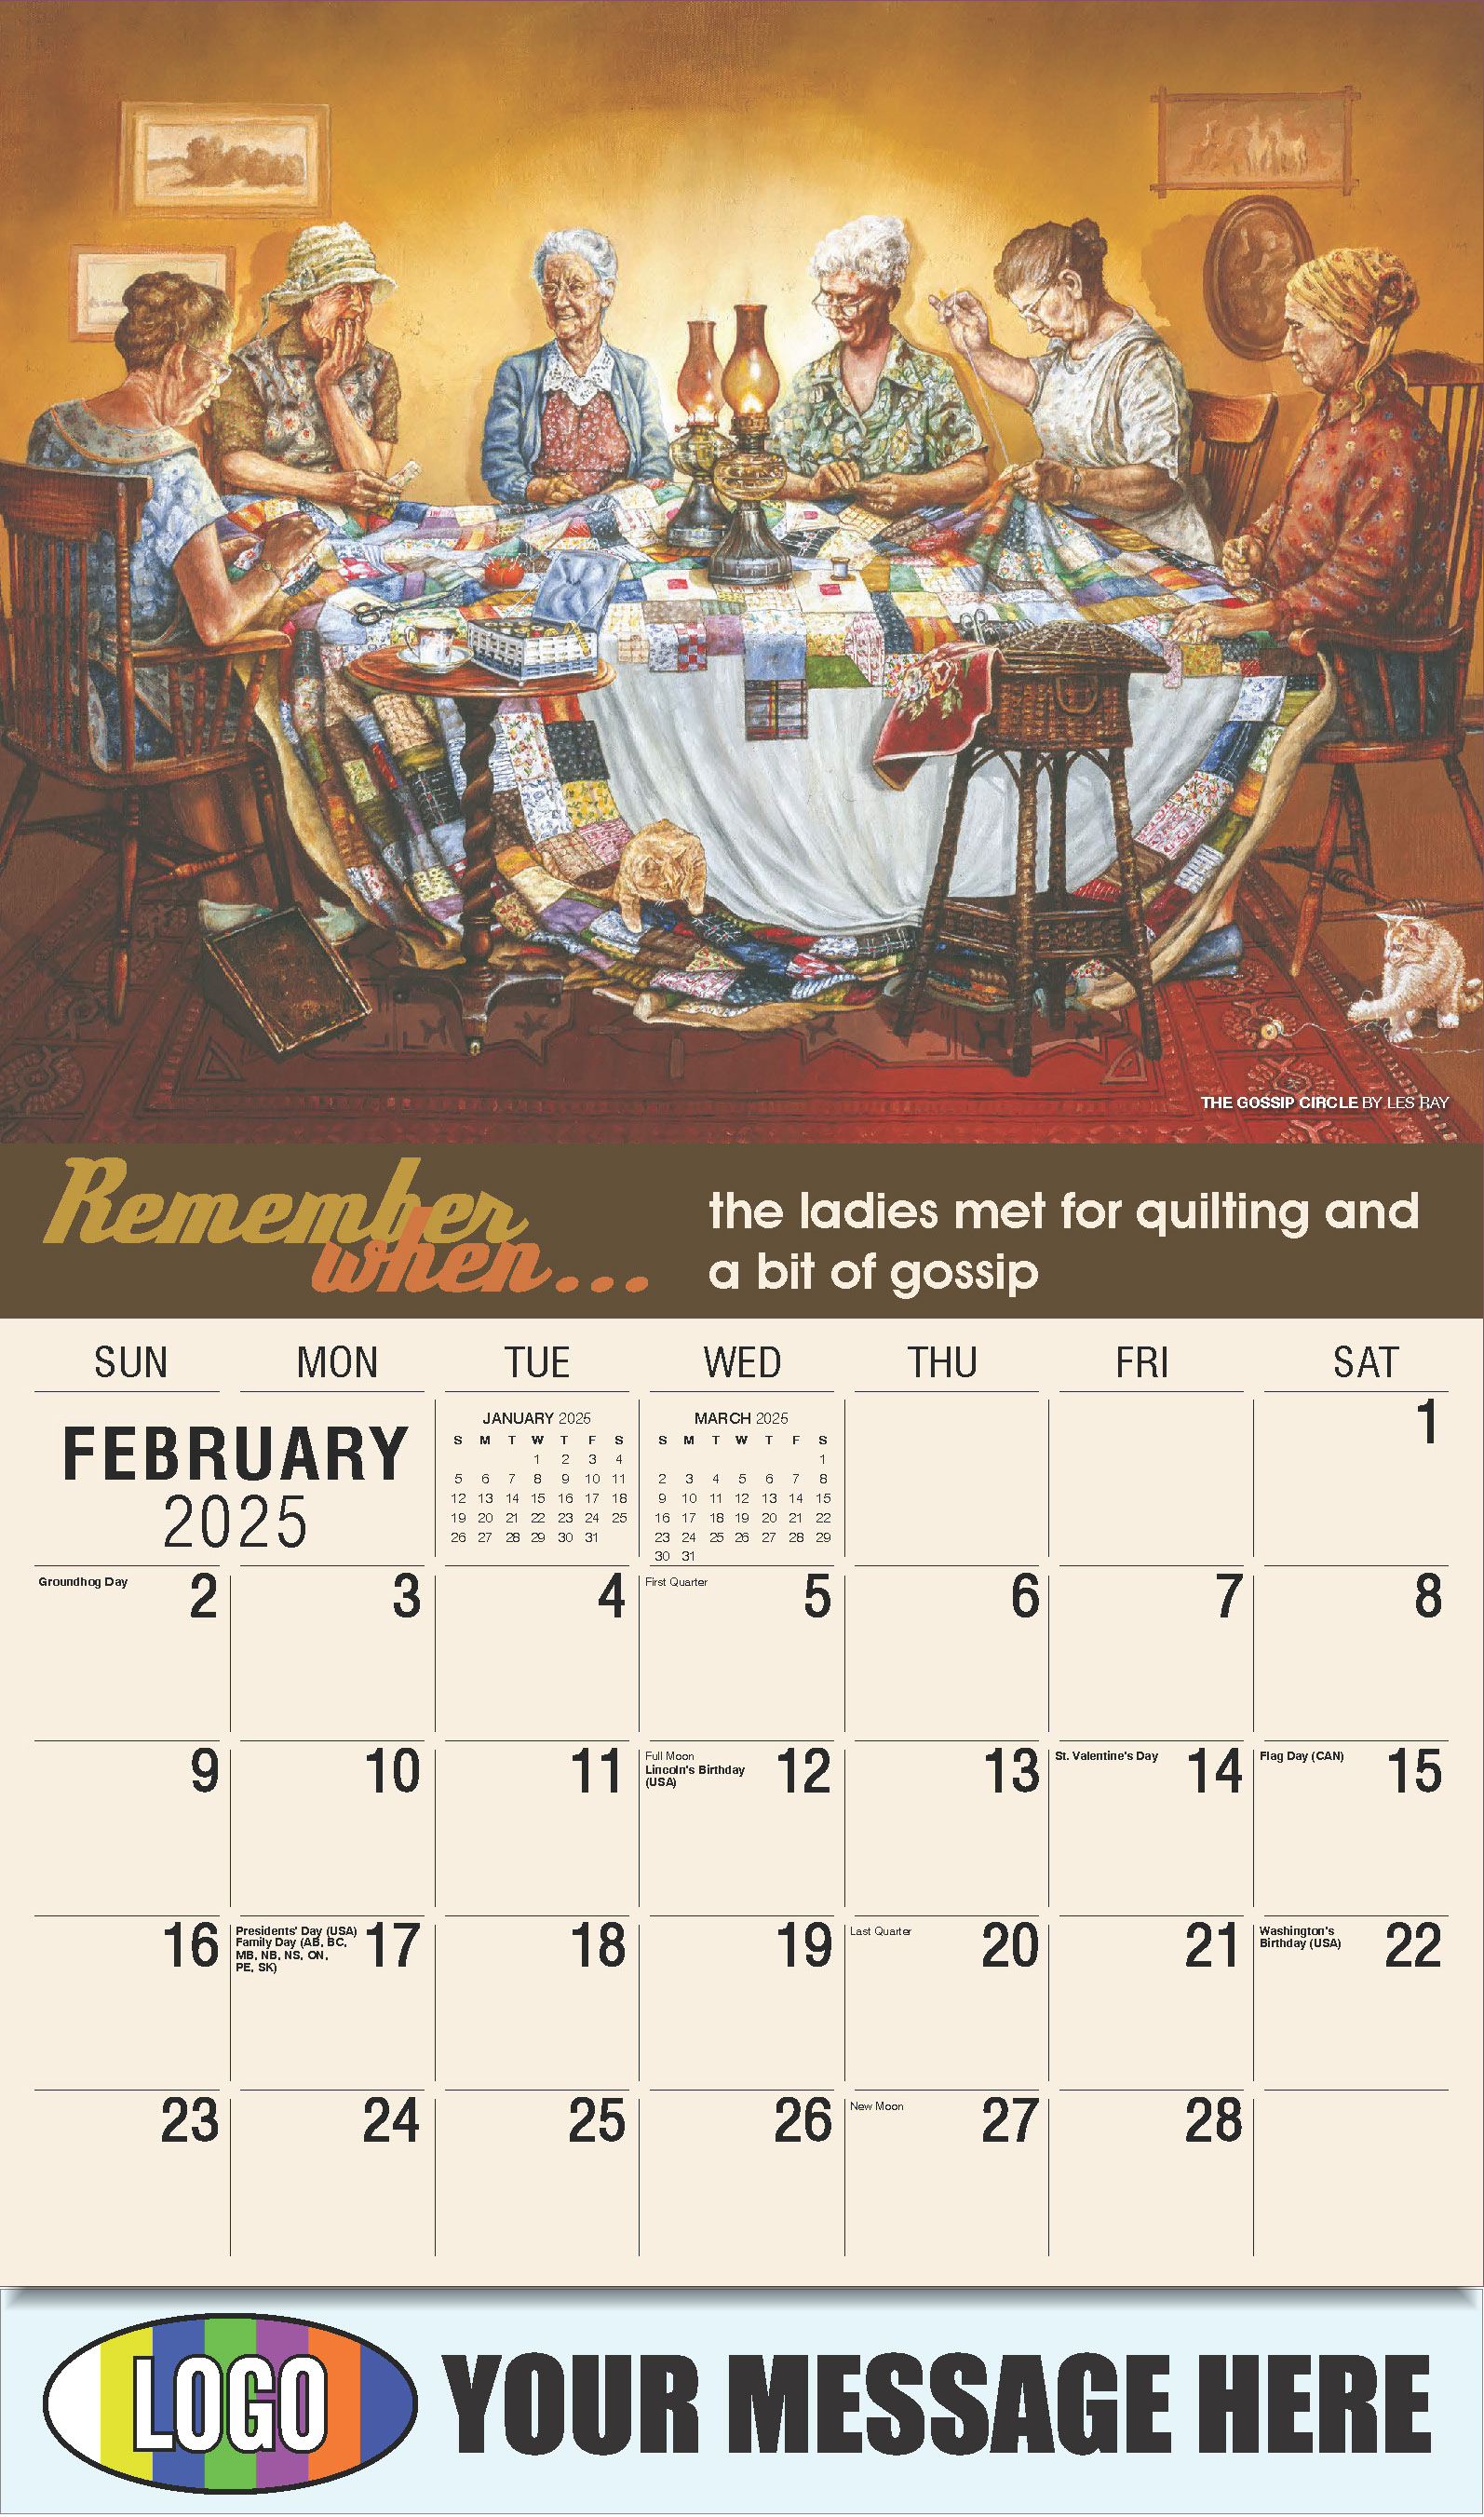 Remember When 2025 Business Advertising Calendar - February